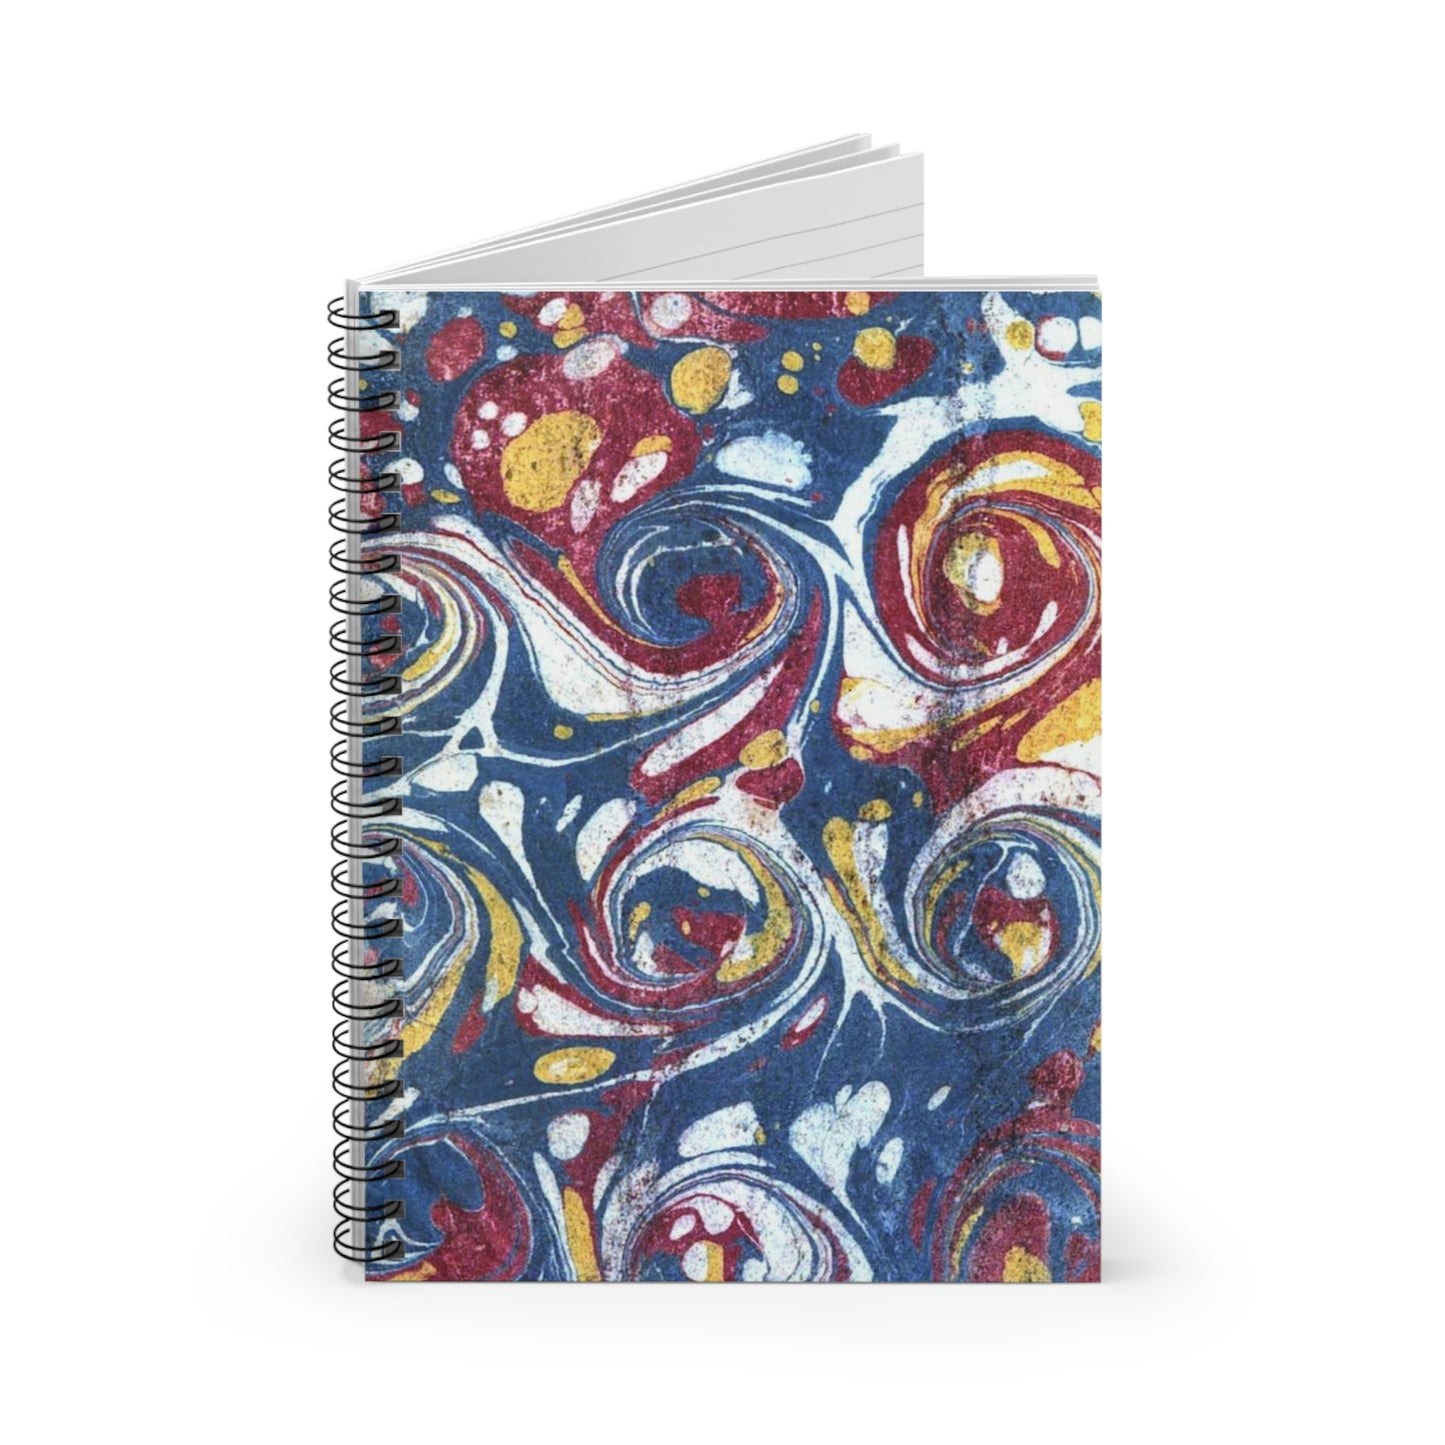 Spiral Notebook Antique Marbled Cover Design - Ruled Line